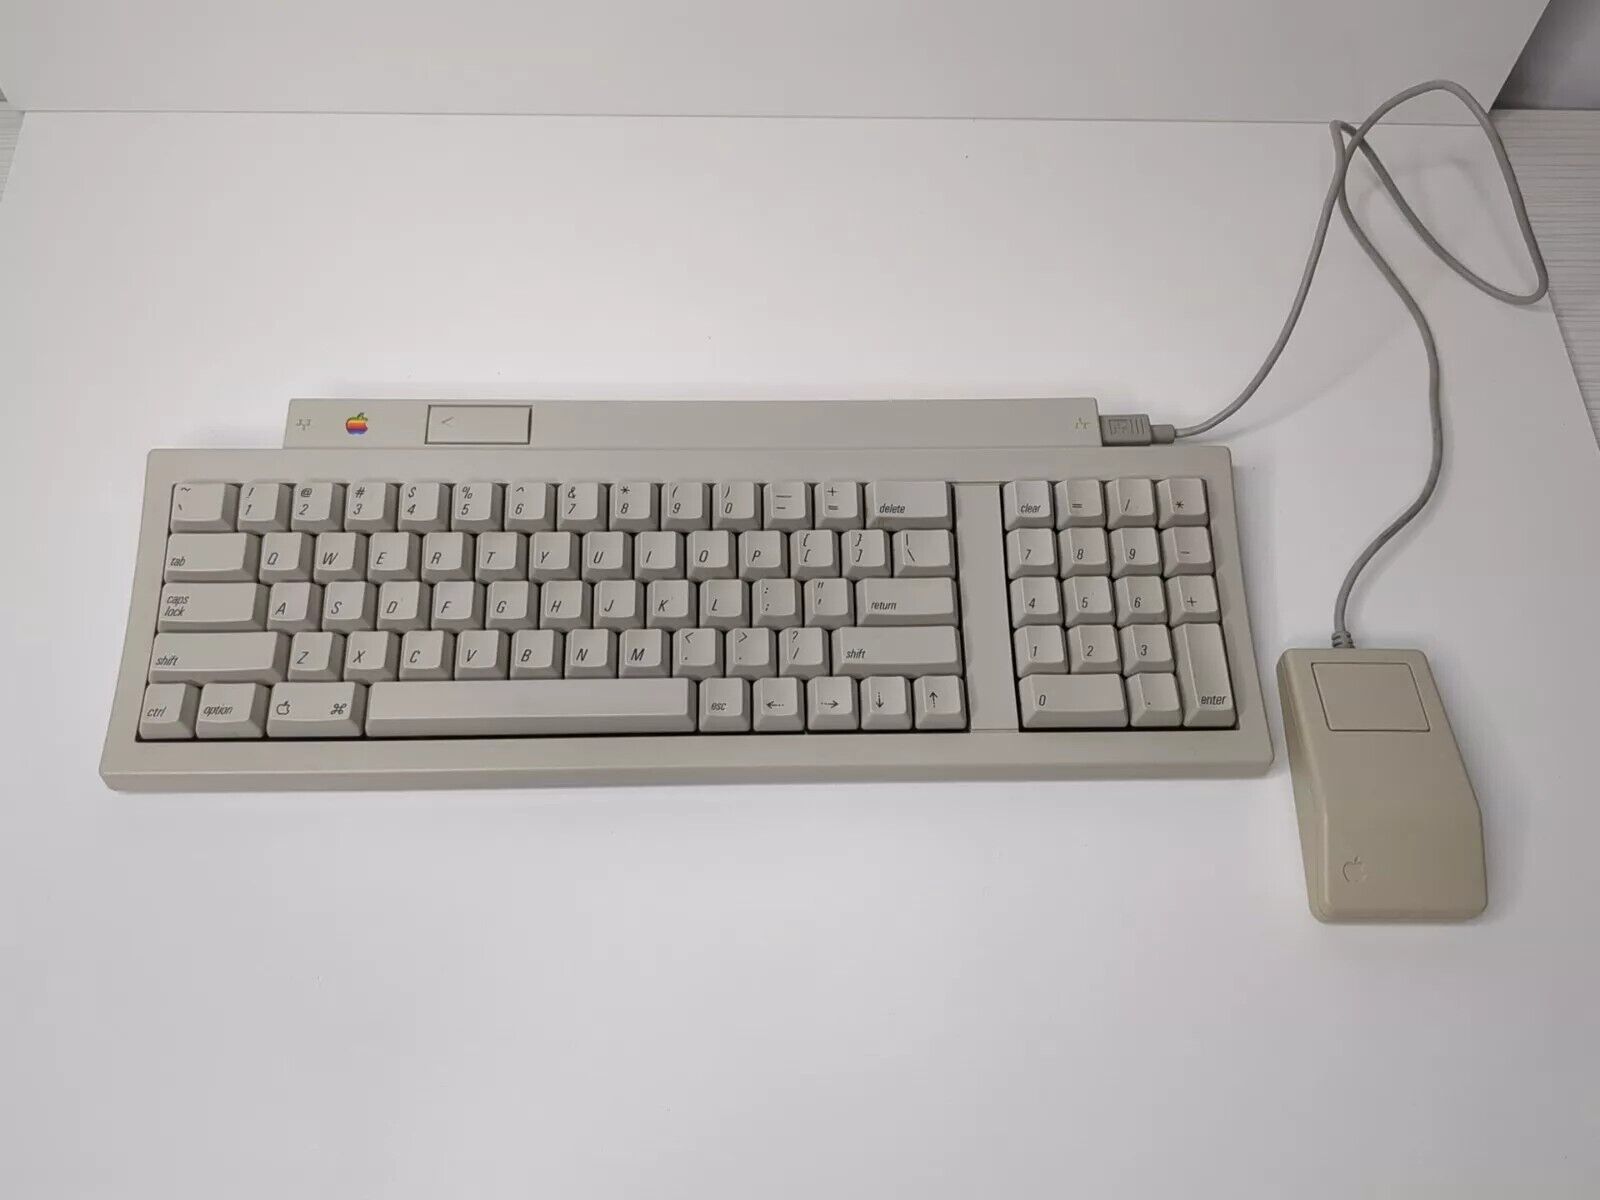 Vintage Apple ADB Keyboard II M0487 W Bus Mouse G5431 Untested Clean Ports